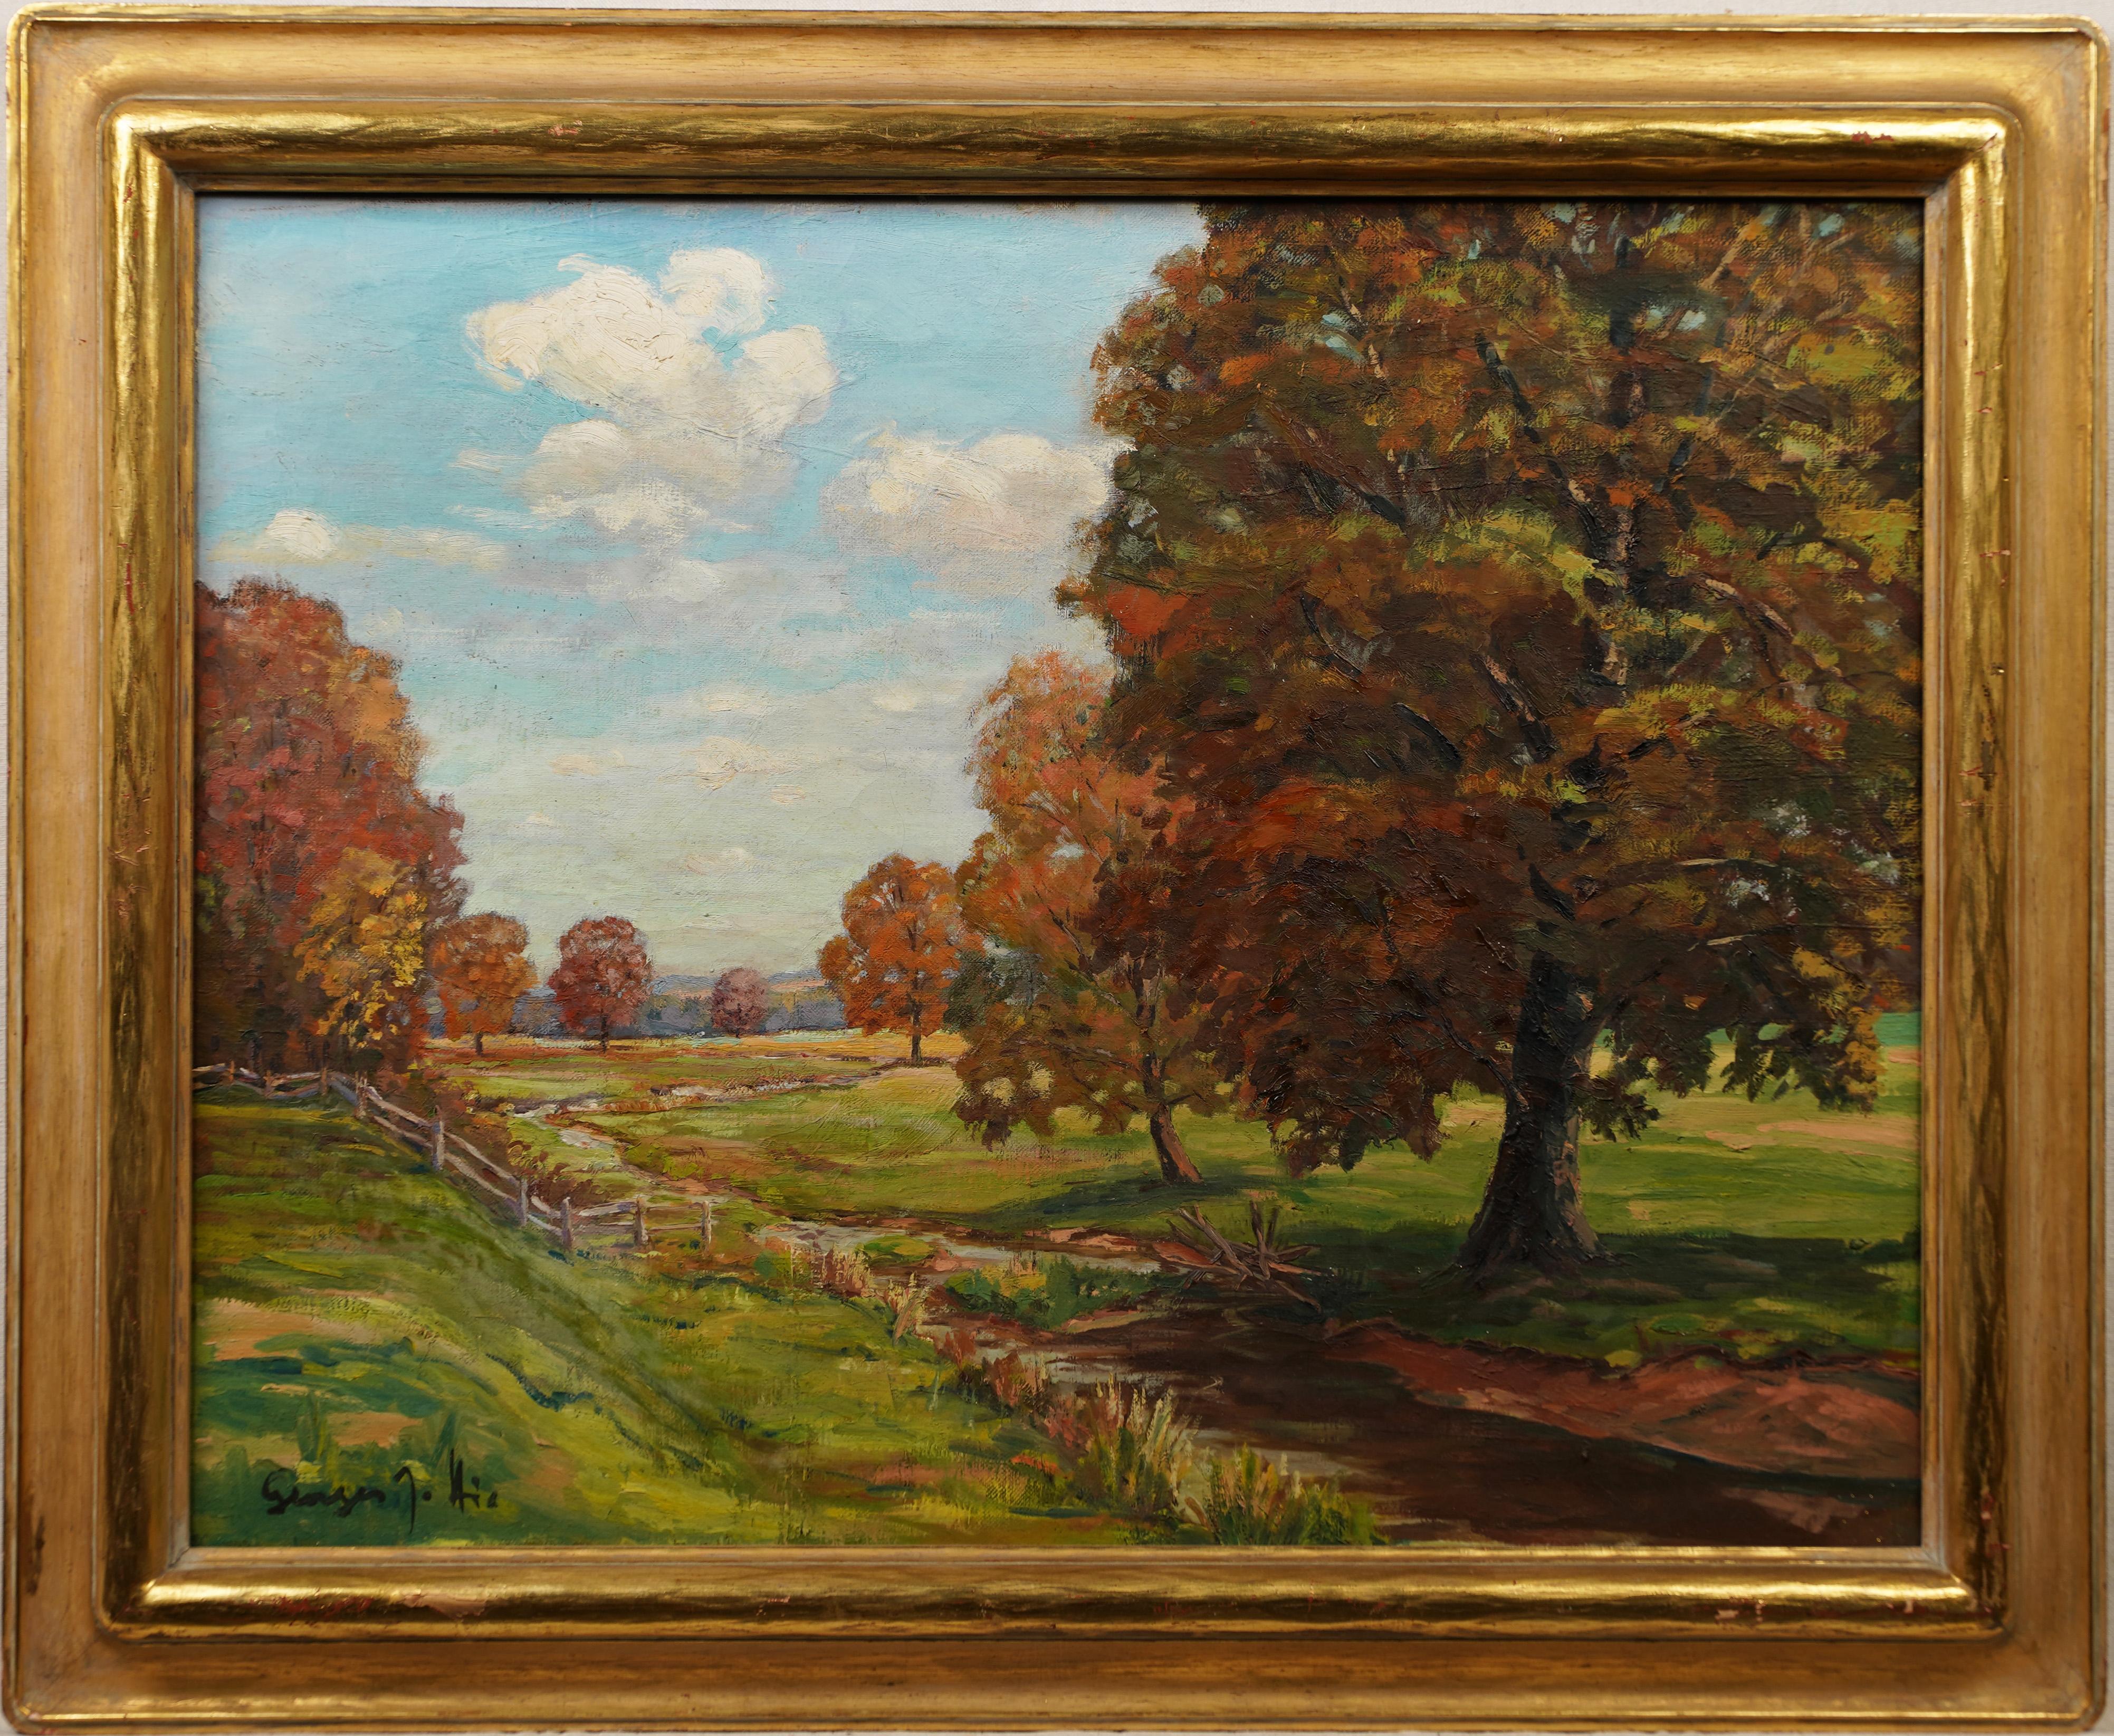 Antique American impressionist landscape oil painting.  Oil on canvas.  Signed.  Framed.